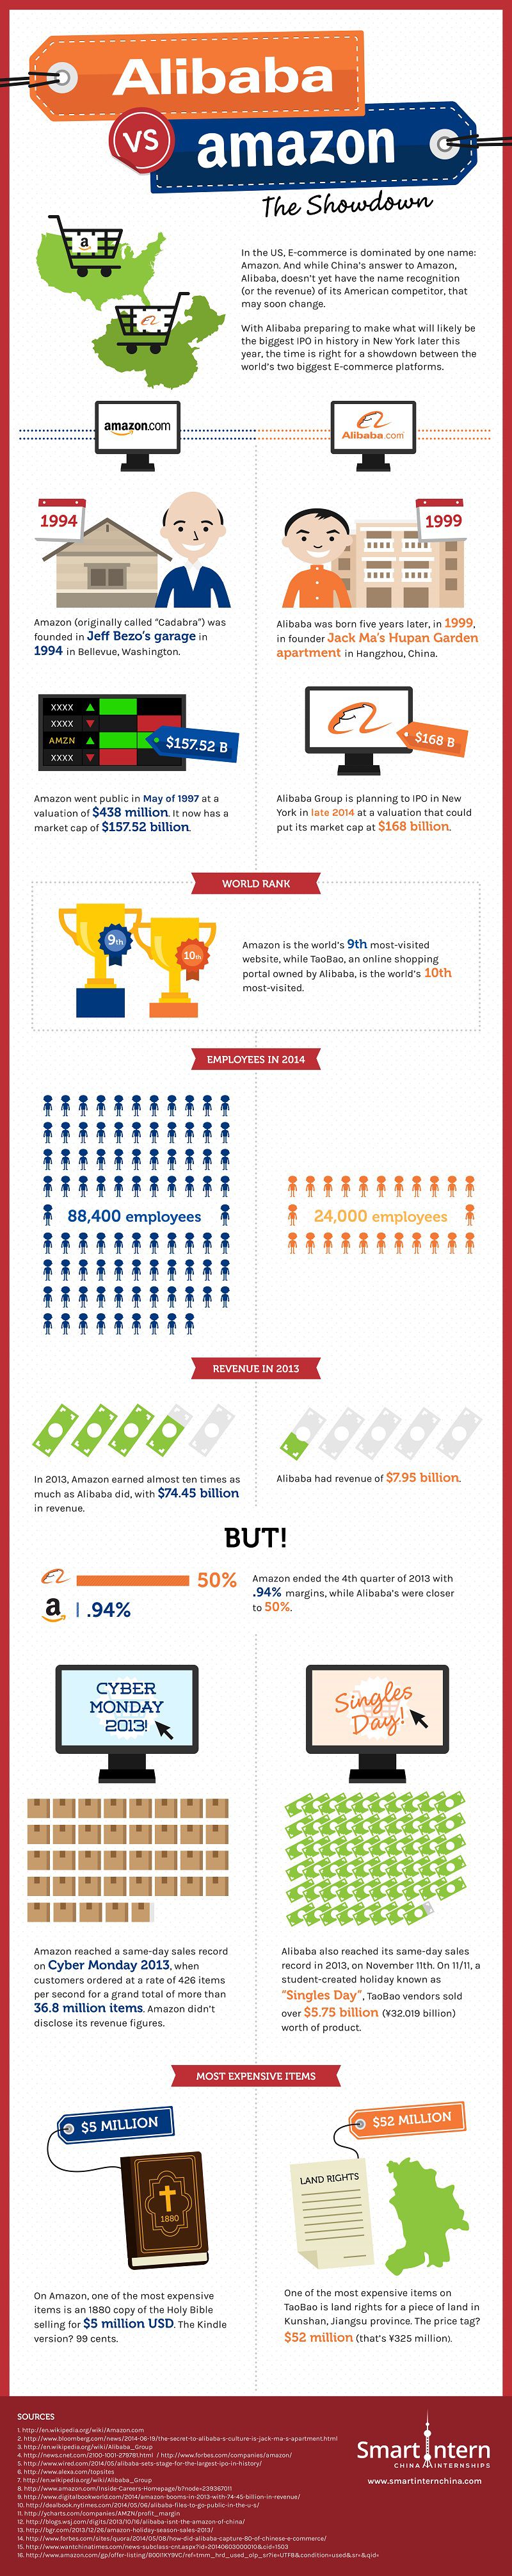 alibaba_vs_amazon_infographic_small__red